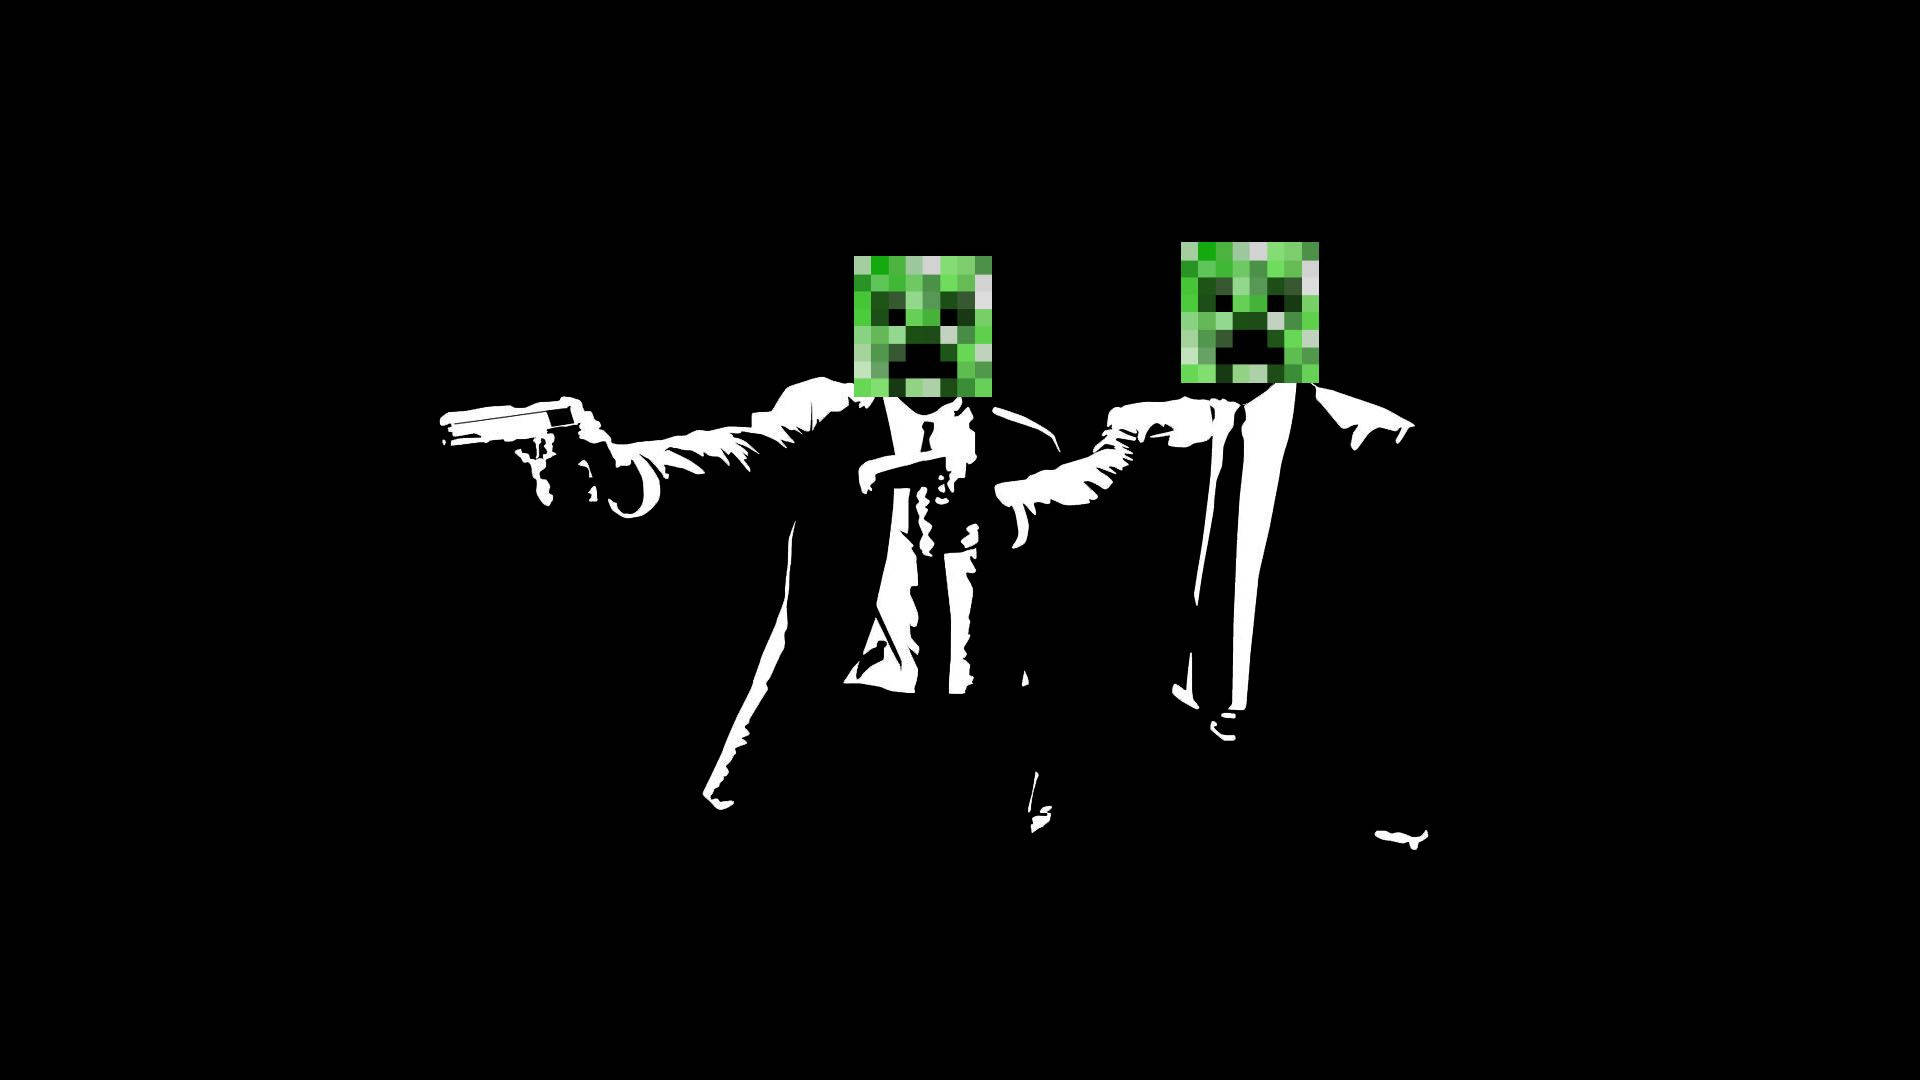 Minecraft Meme Wallpaper